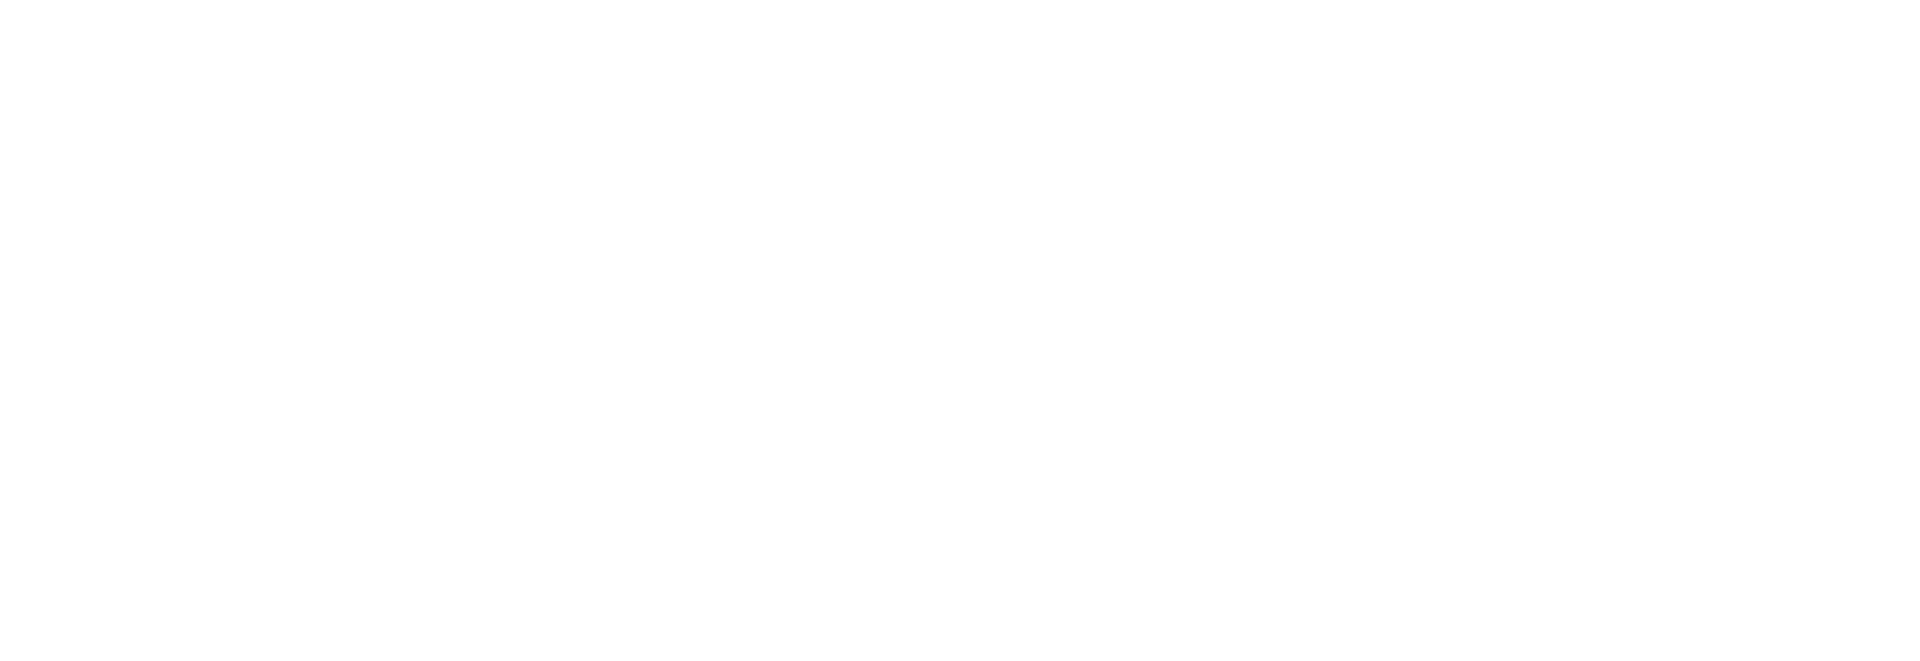 Mammini-Company-Logo